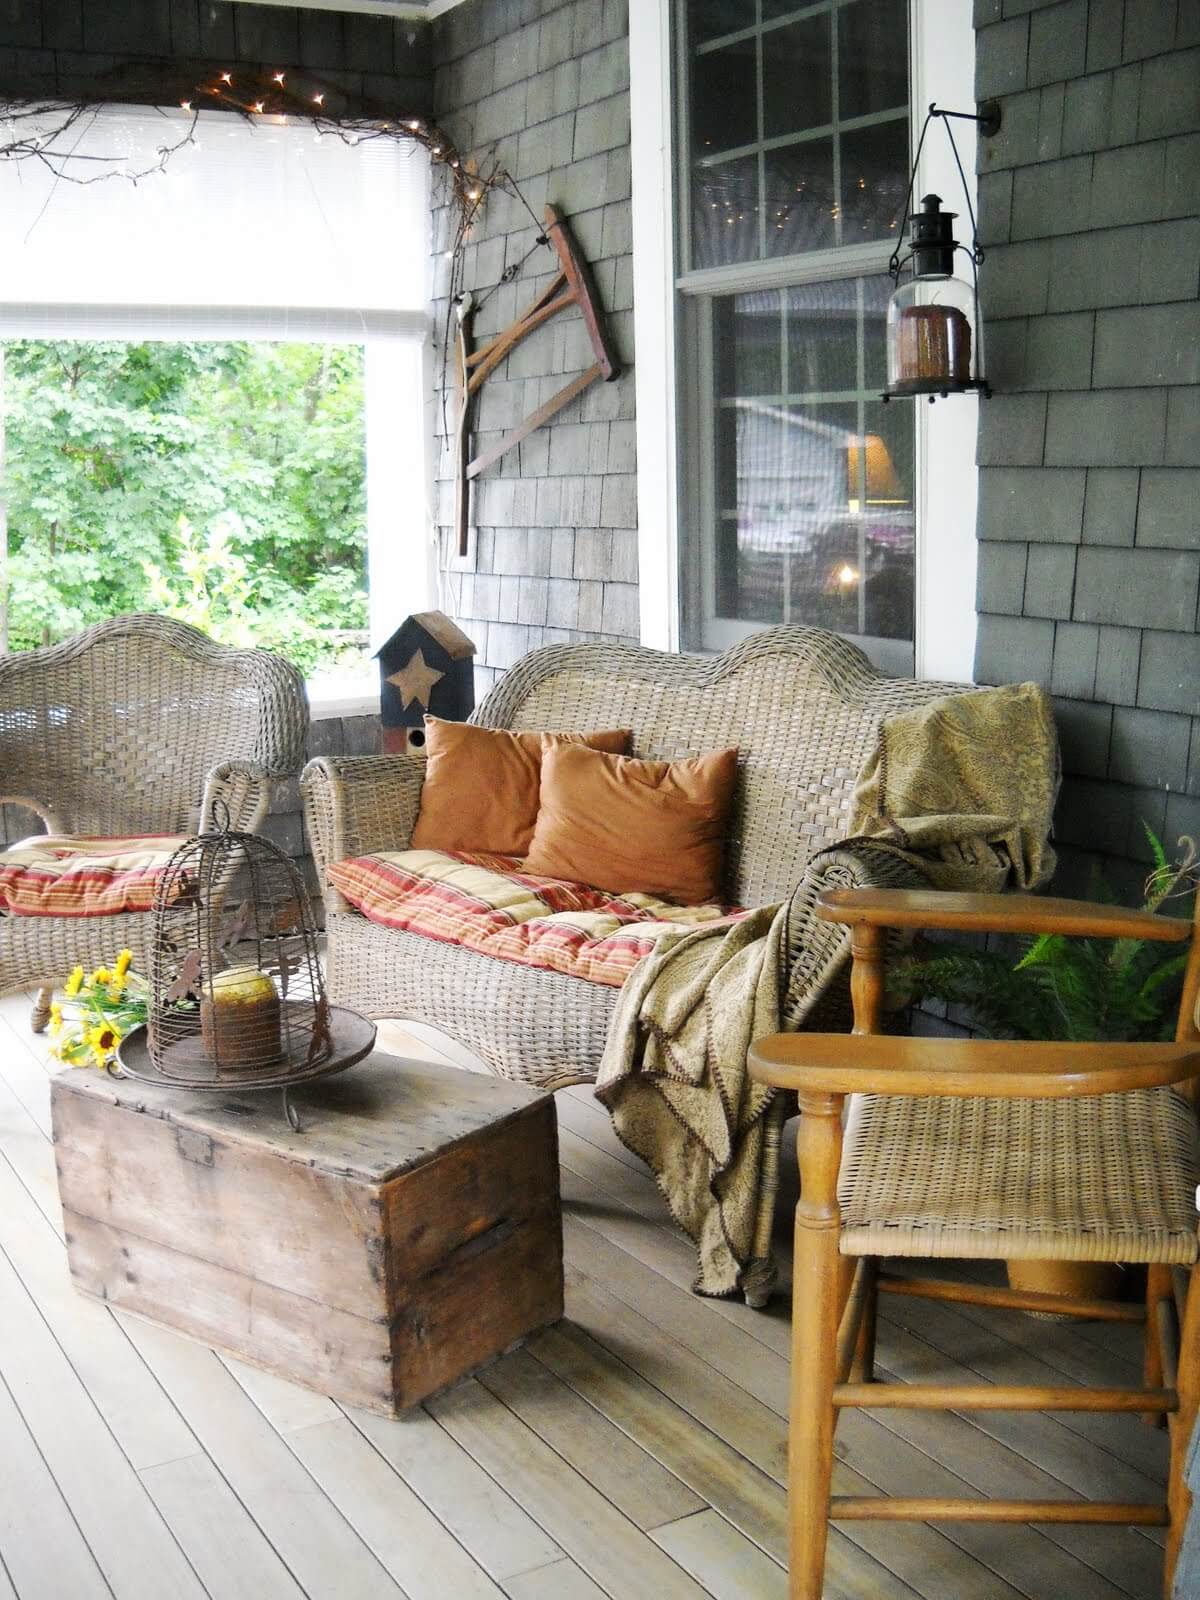 47 Best Rustic Farmhouse Porch Decor Ideas And Designs For 2017